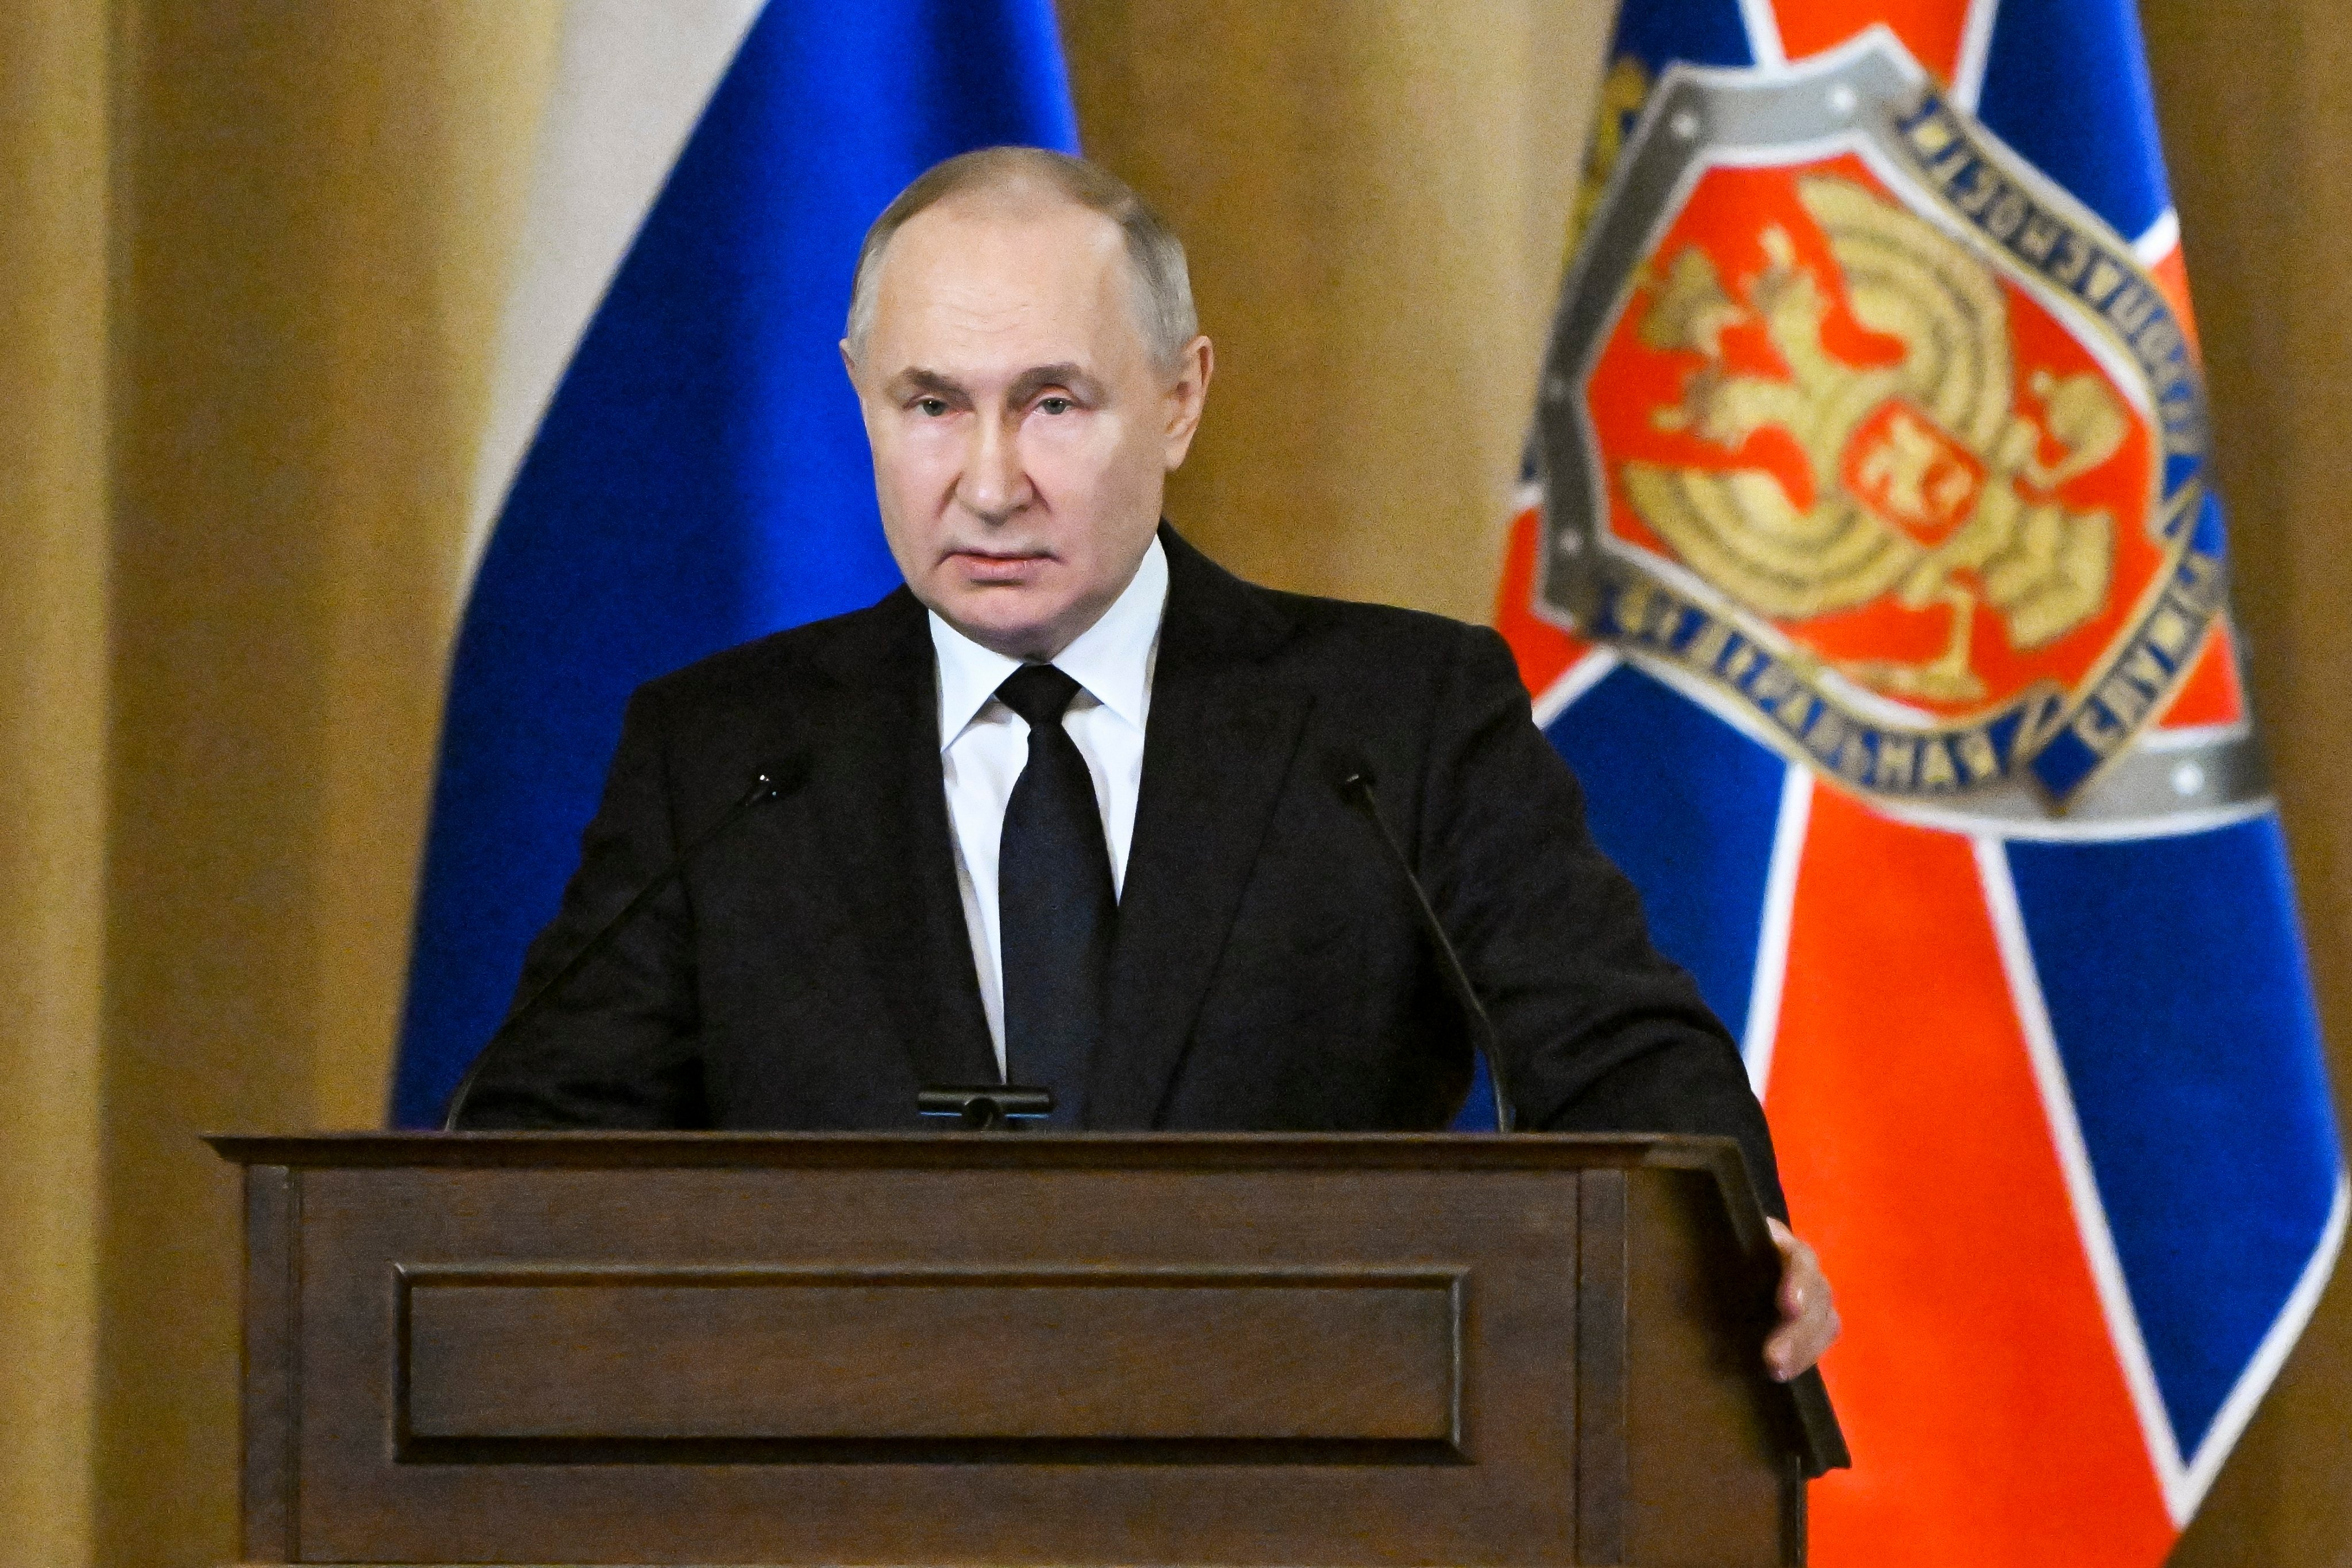 Russian President Vladimir Putin on Tuesday. Photo: Sputnik via AP